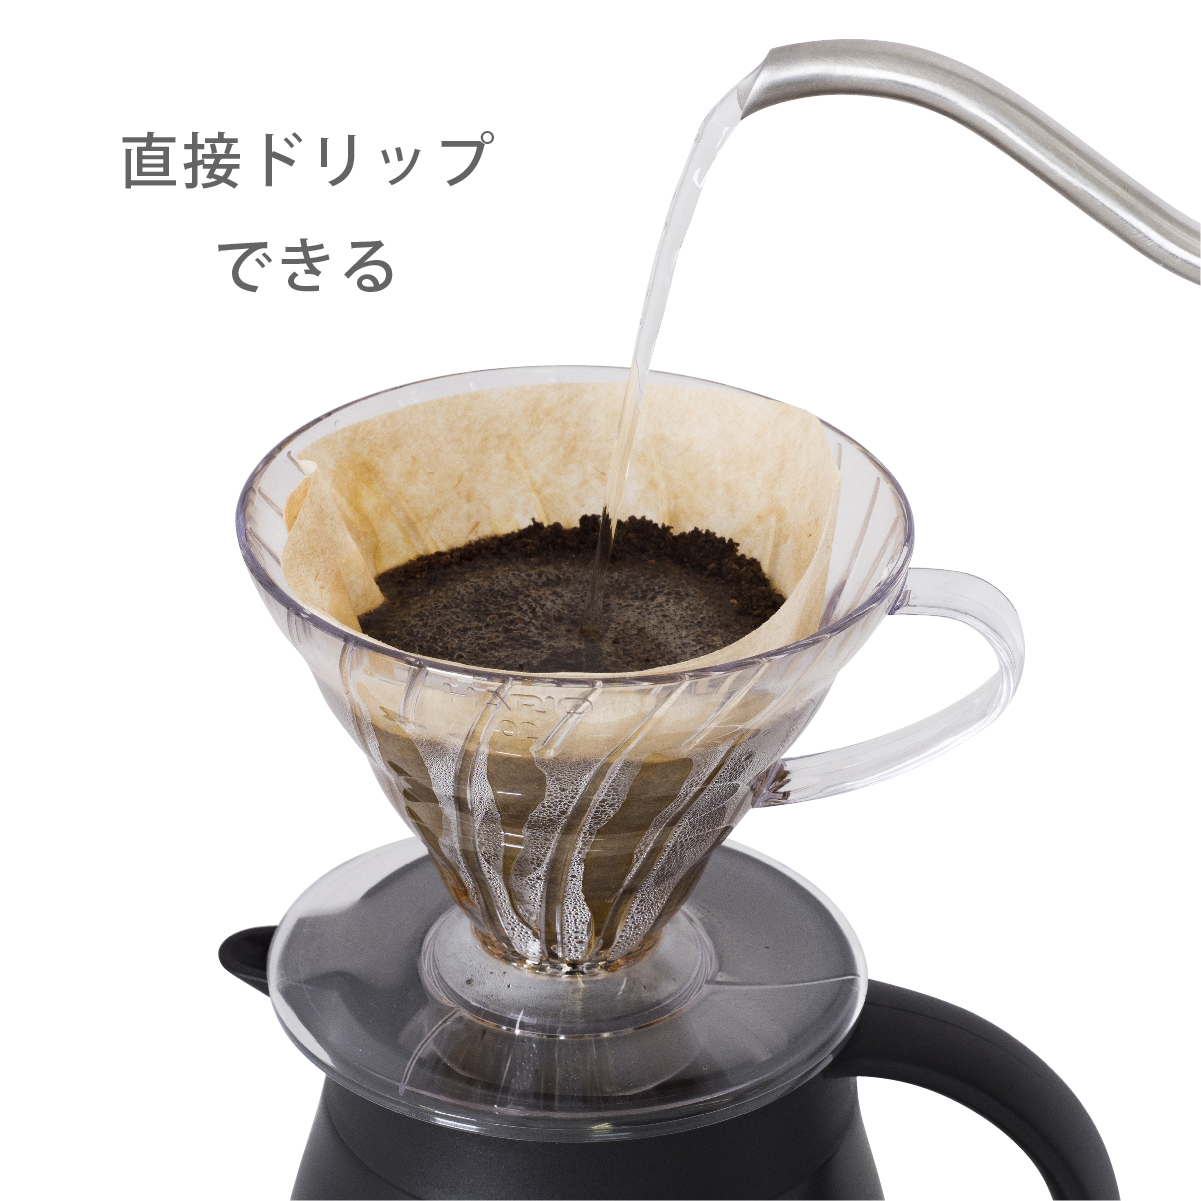 CURRENT コーヒーサーバー 800ml ホワイト | 株式会社アトラス